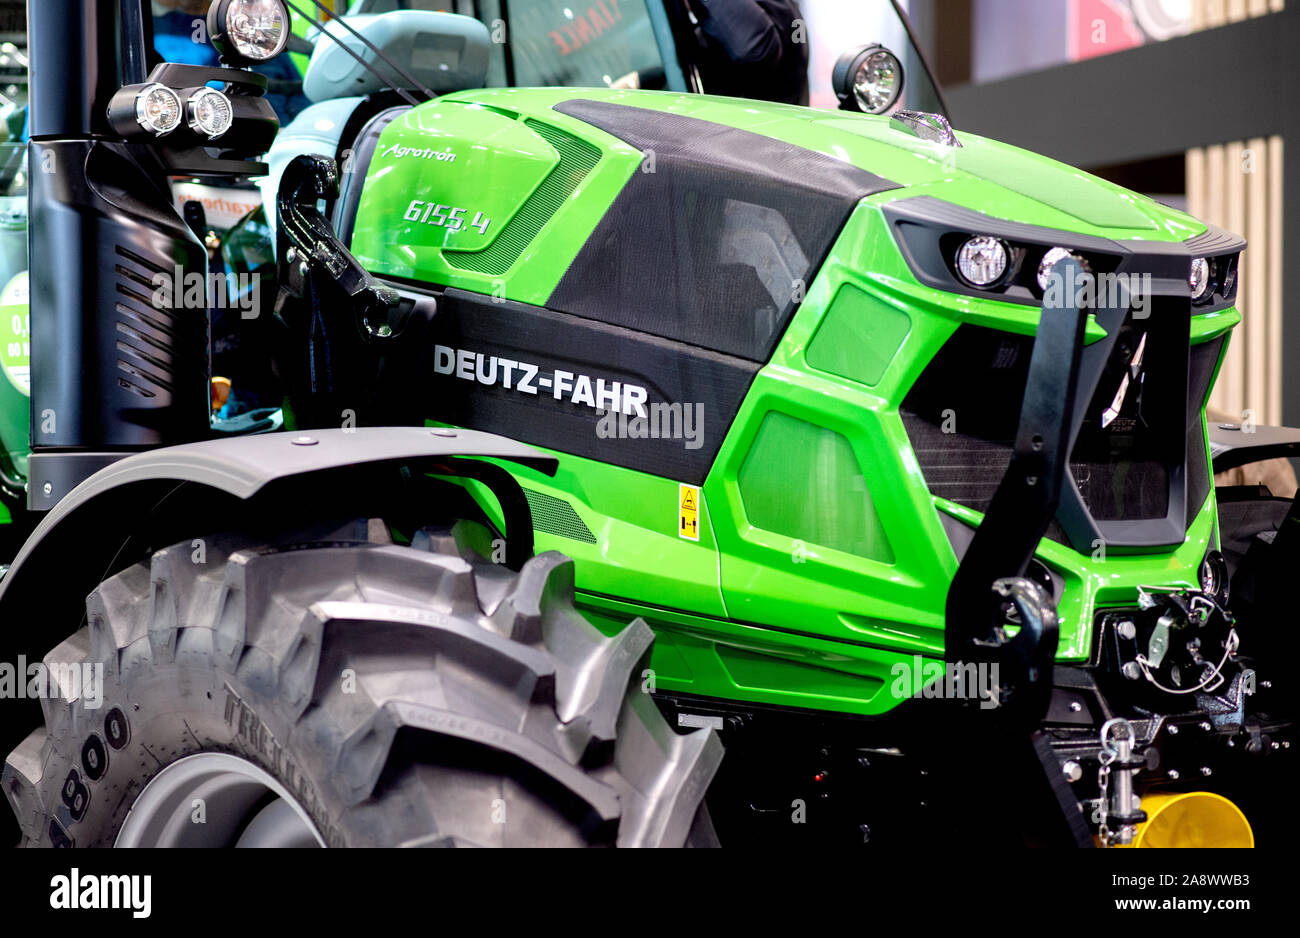 New exhibitors present Deutz-Fahr tractors and Ziegler Harvesting at Agromek